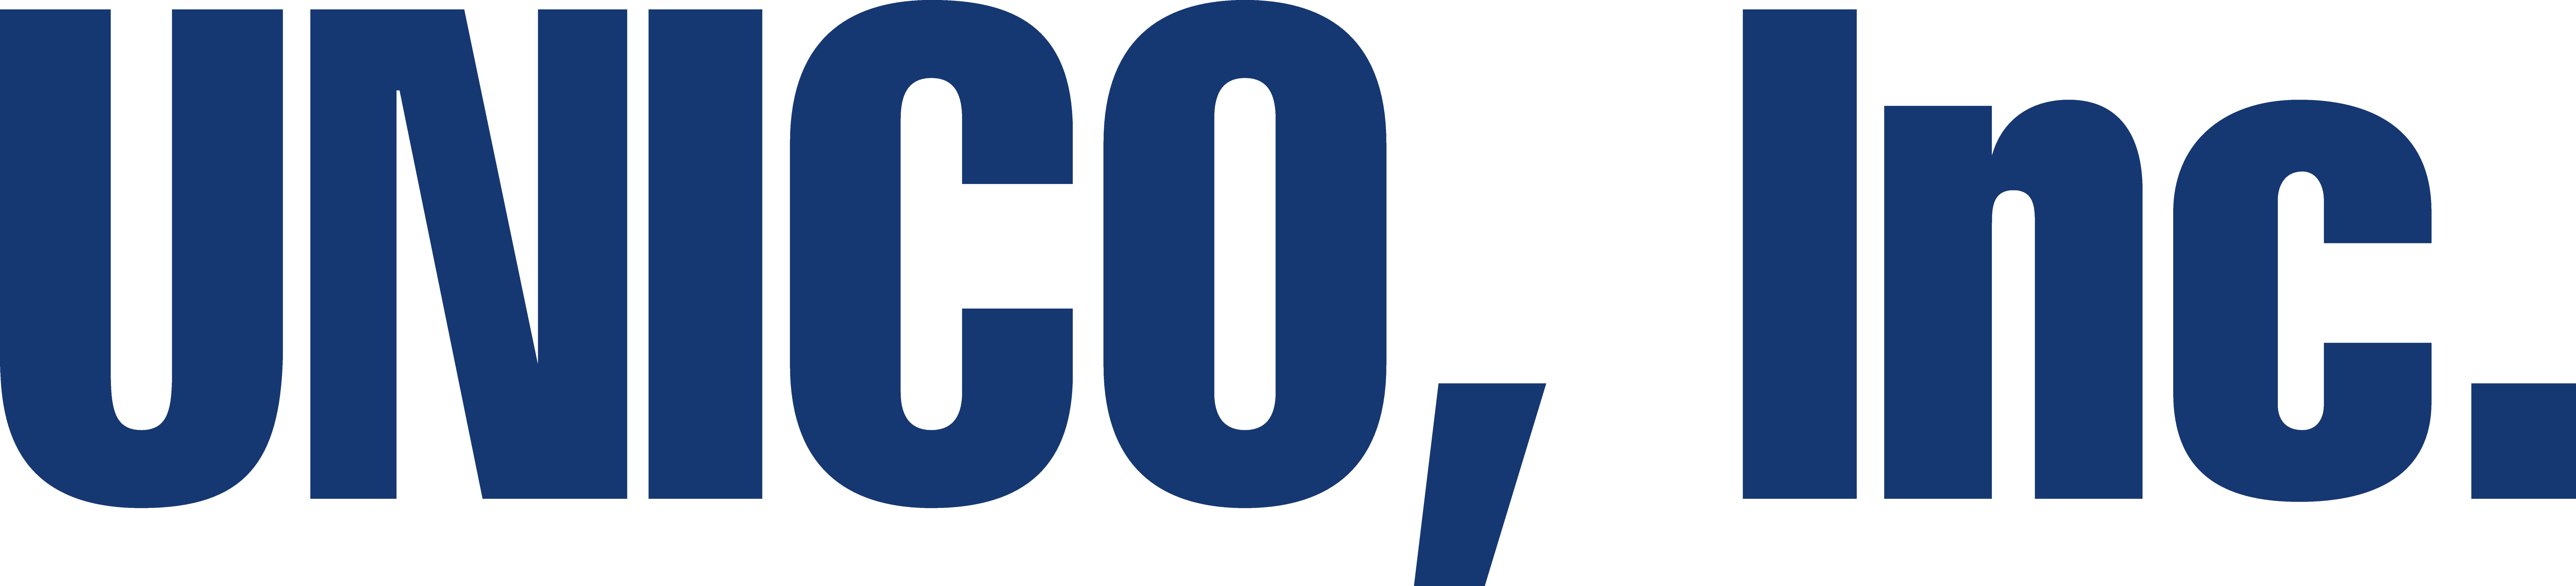 Unic, Inc. company logo